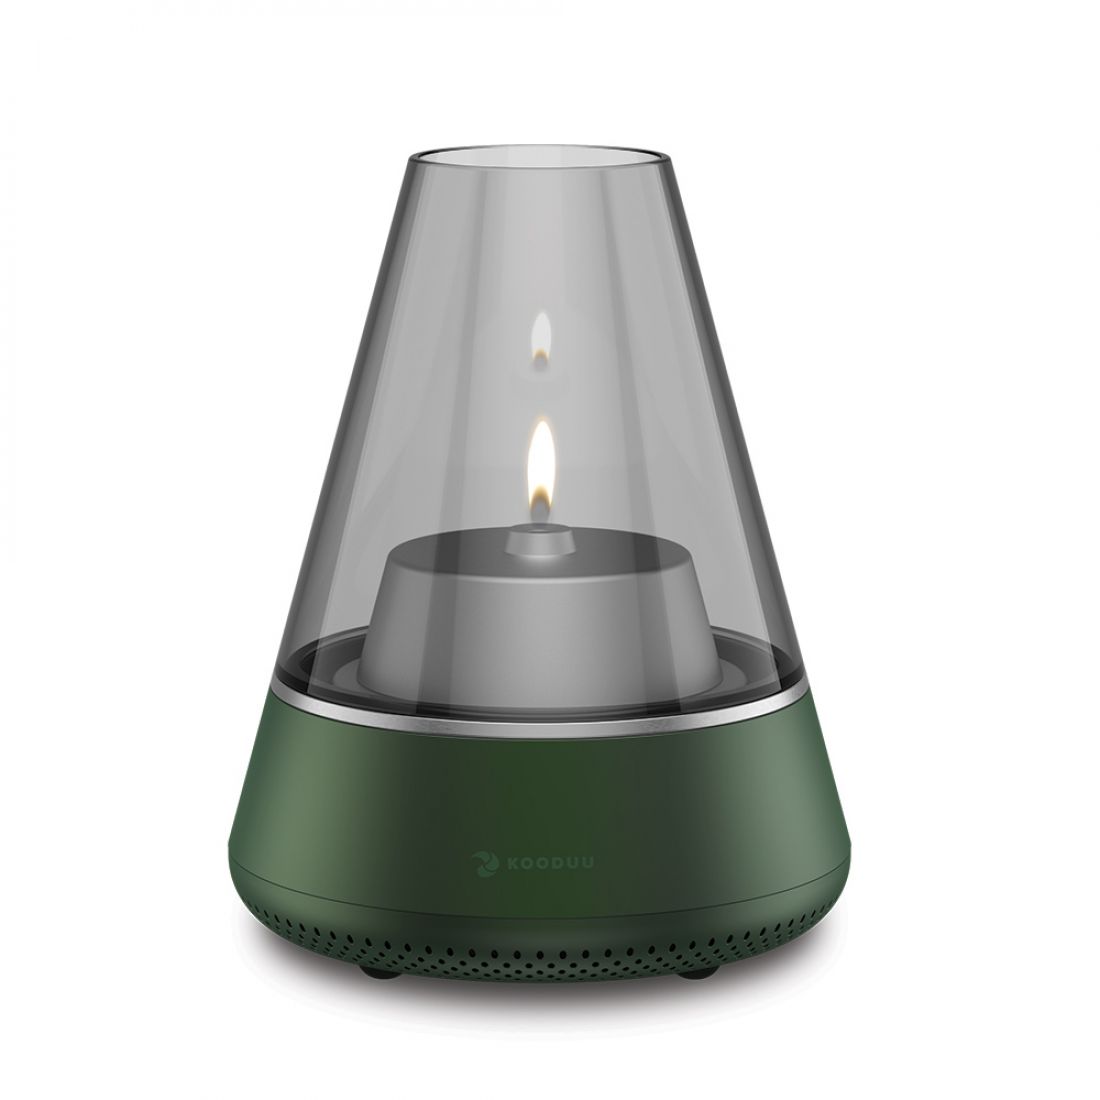 Kooduu-Nordic Light Pro (Green)